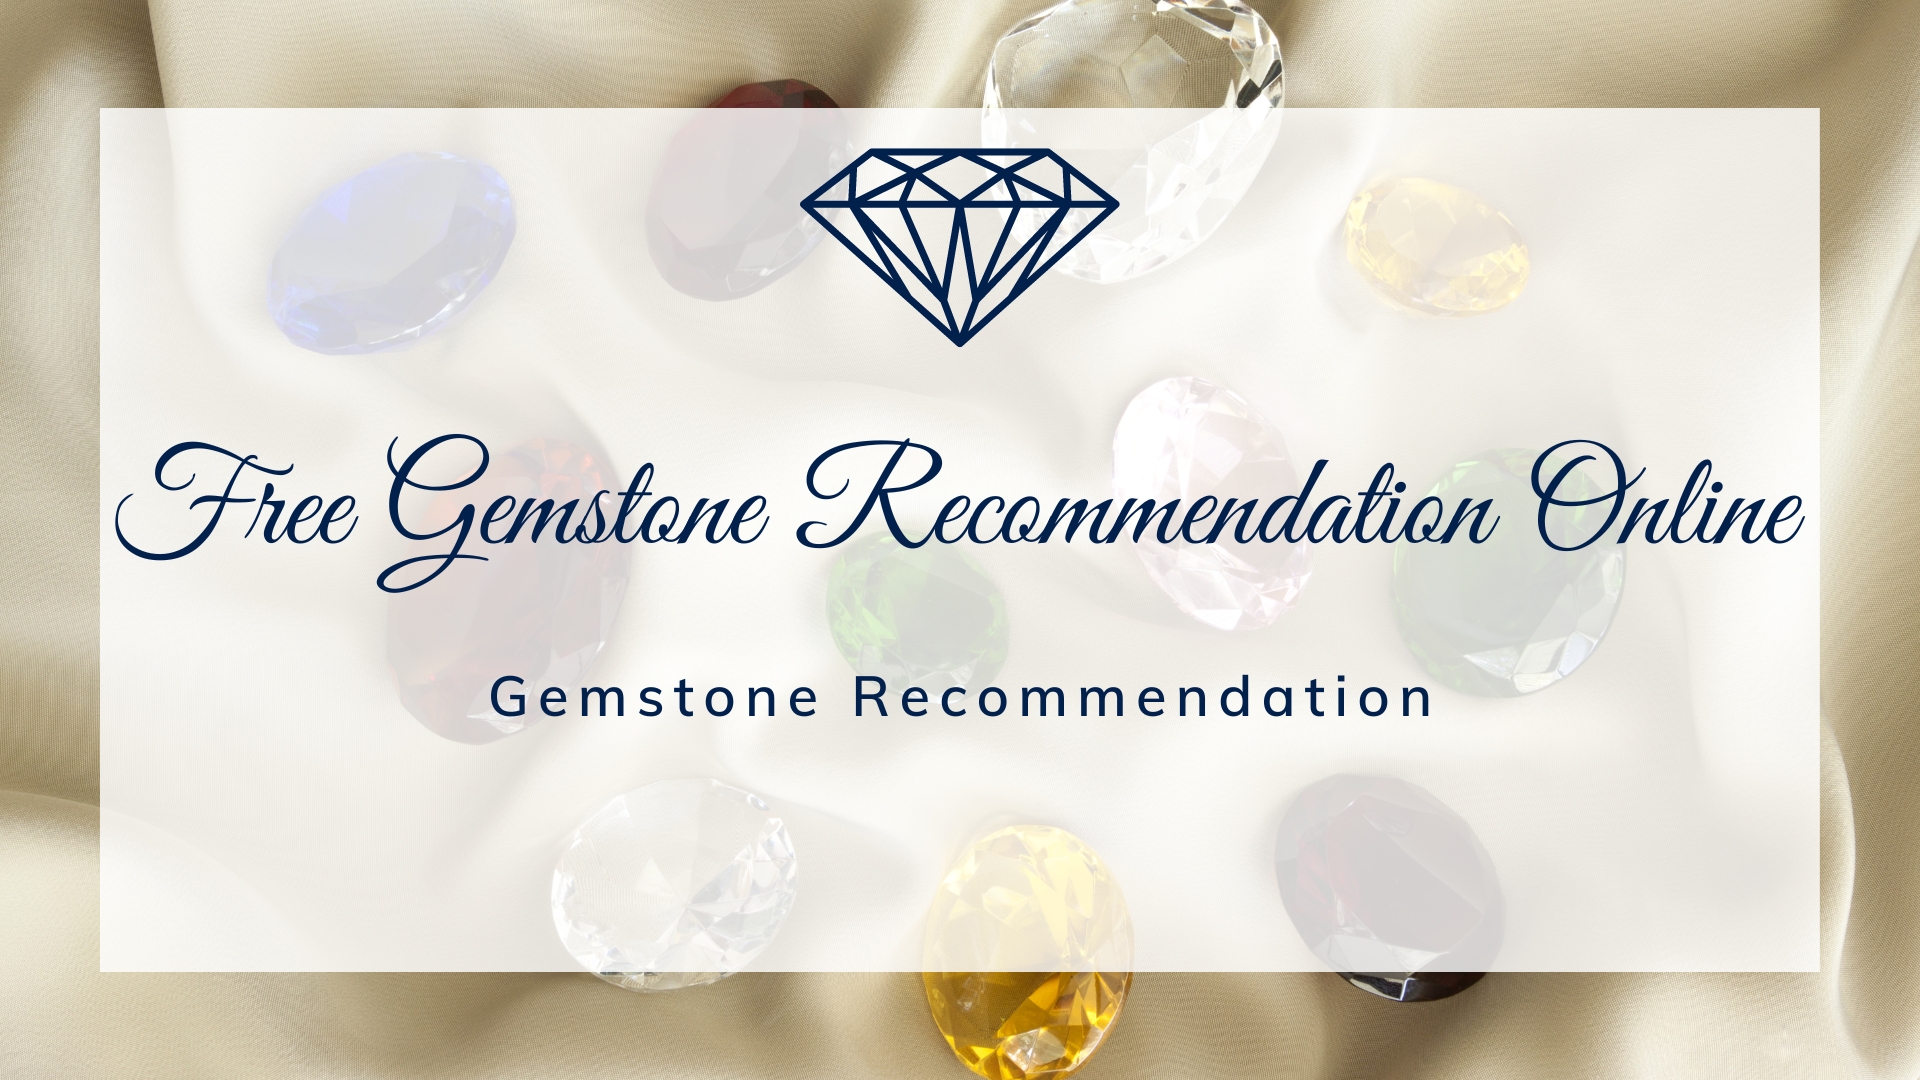 Gemstone Recommendation